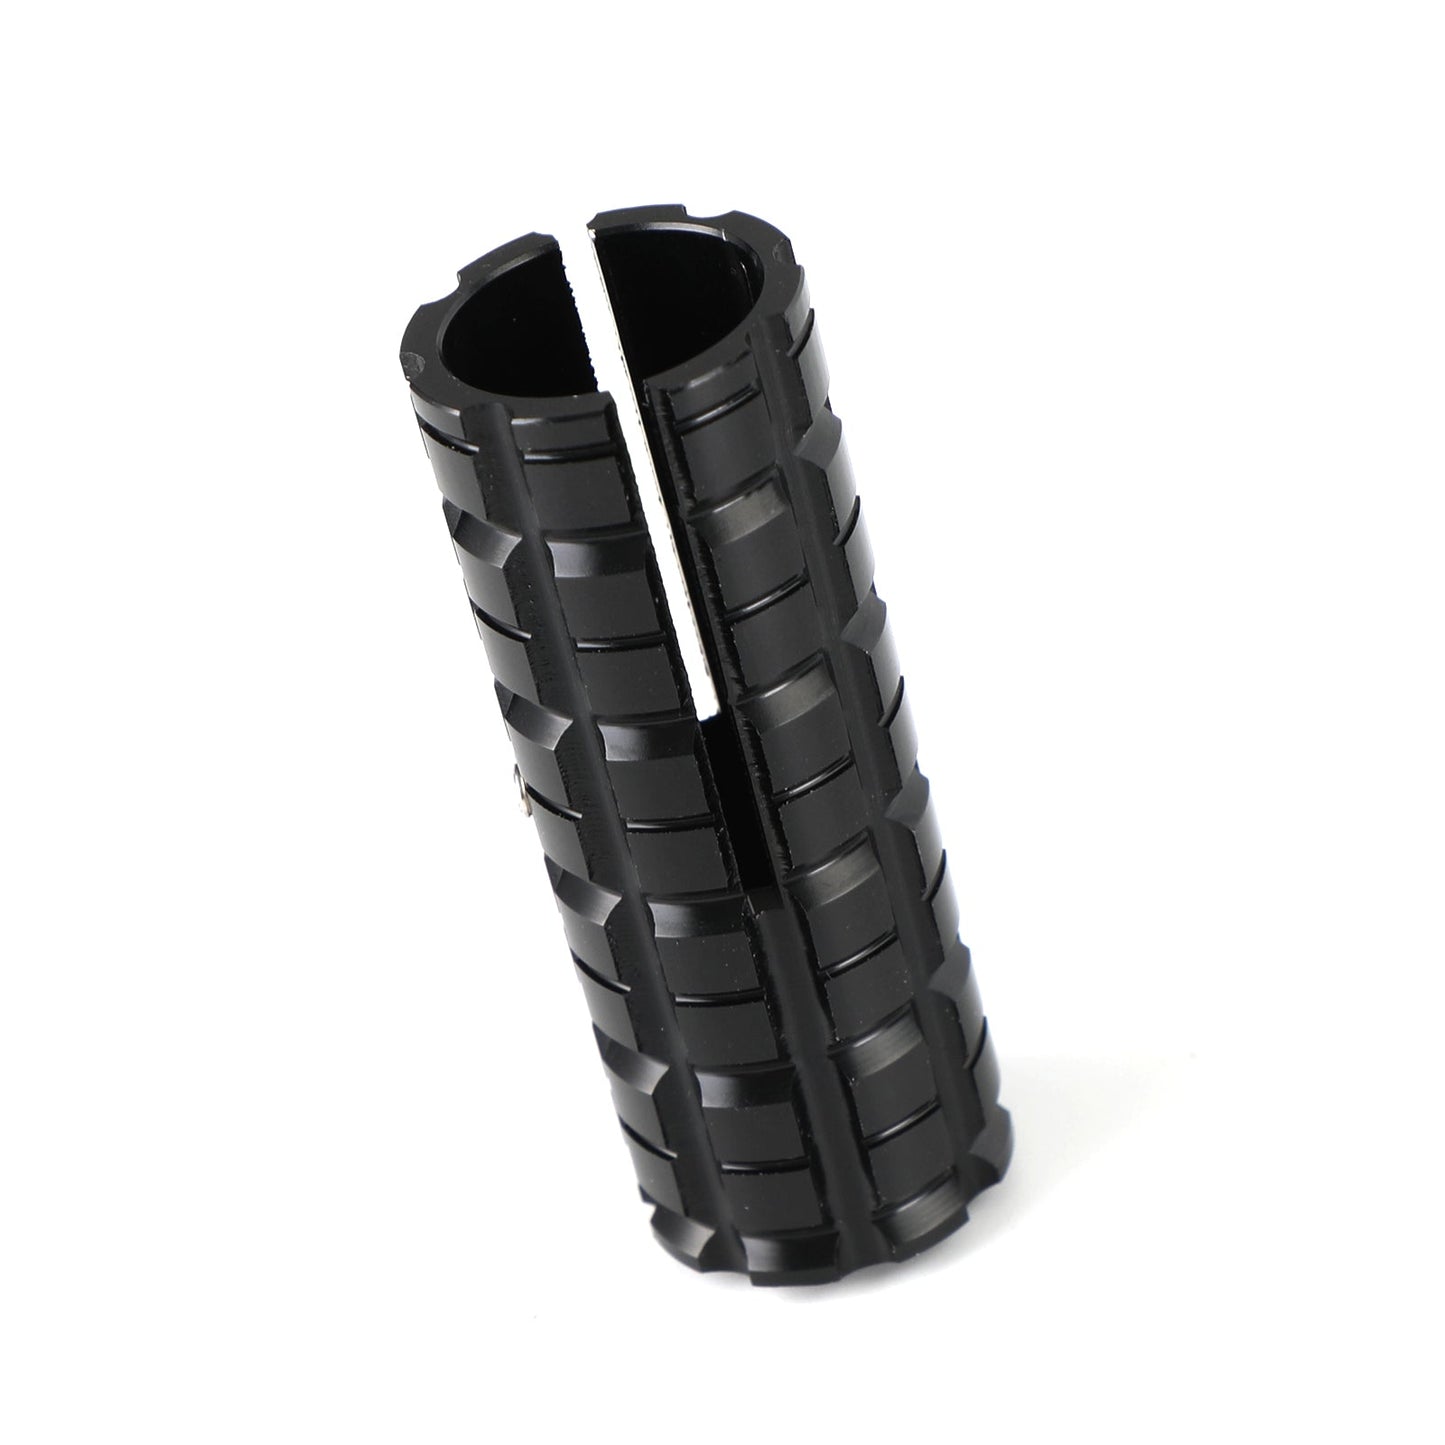 Brake Foot Pedal Extension Enlarge Pad Cnc Universal Black For Bmw Most Models